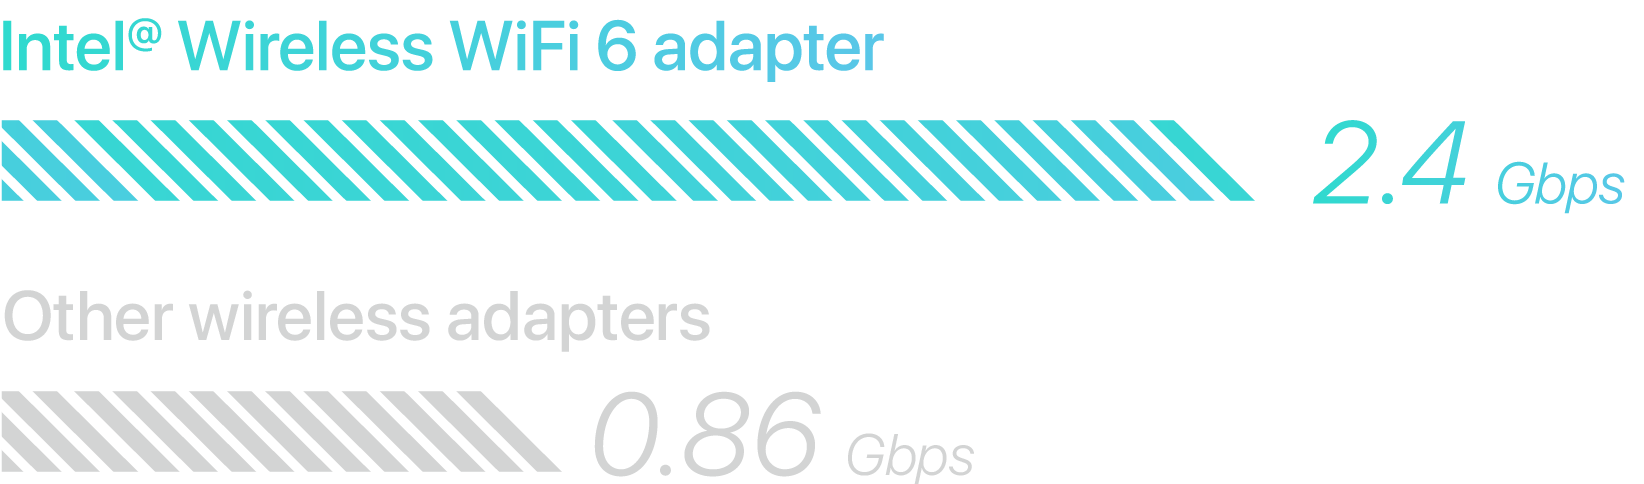 wifi adapter data